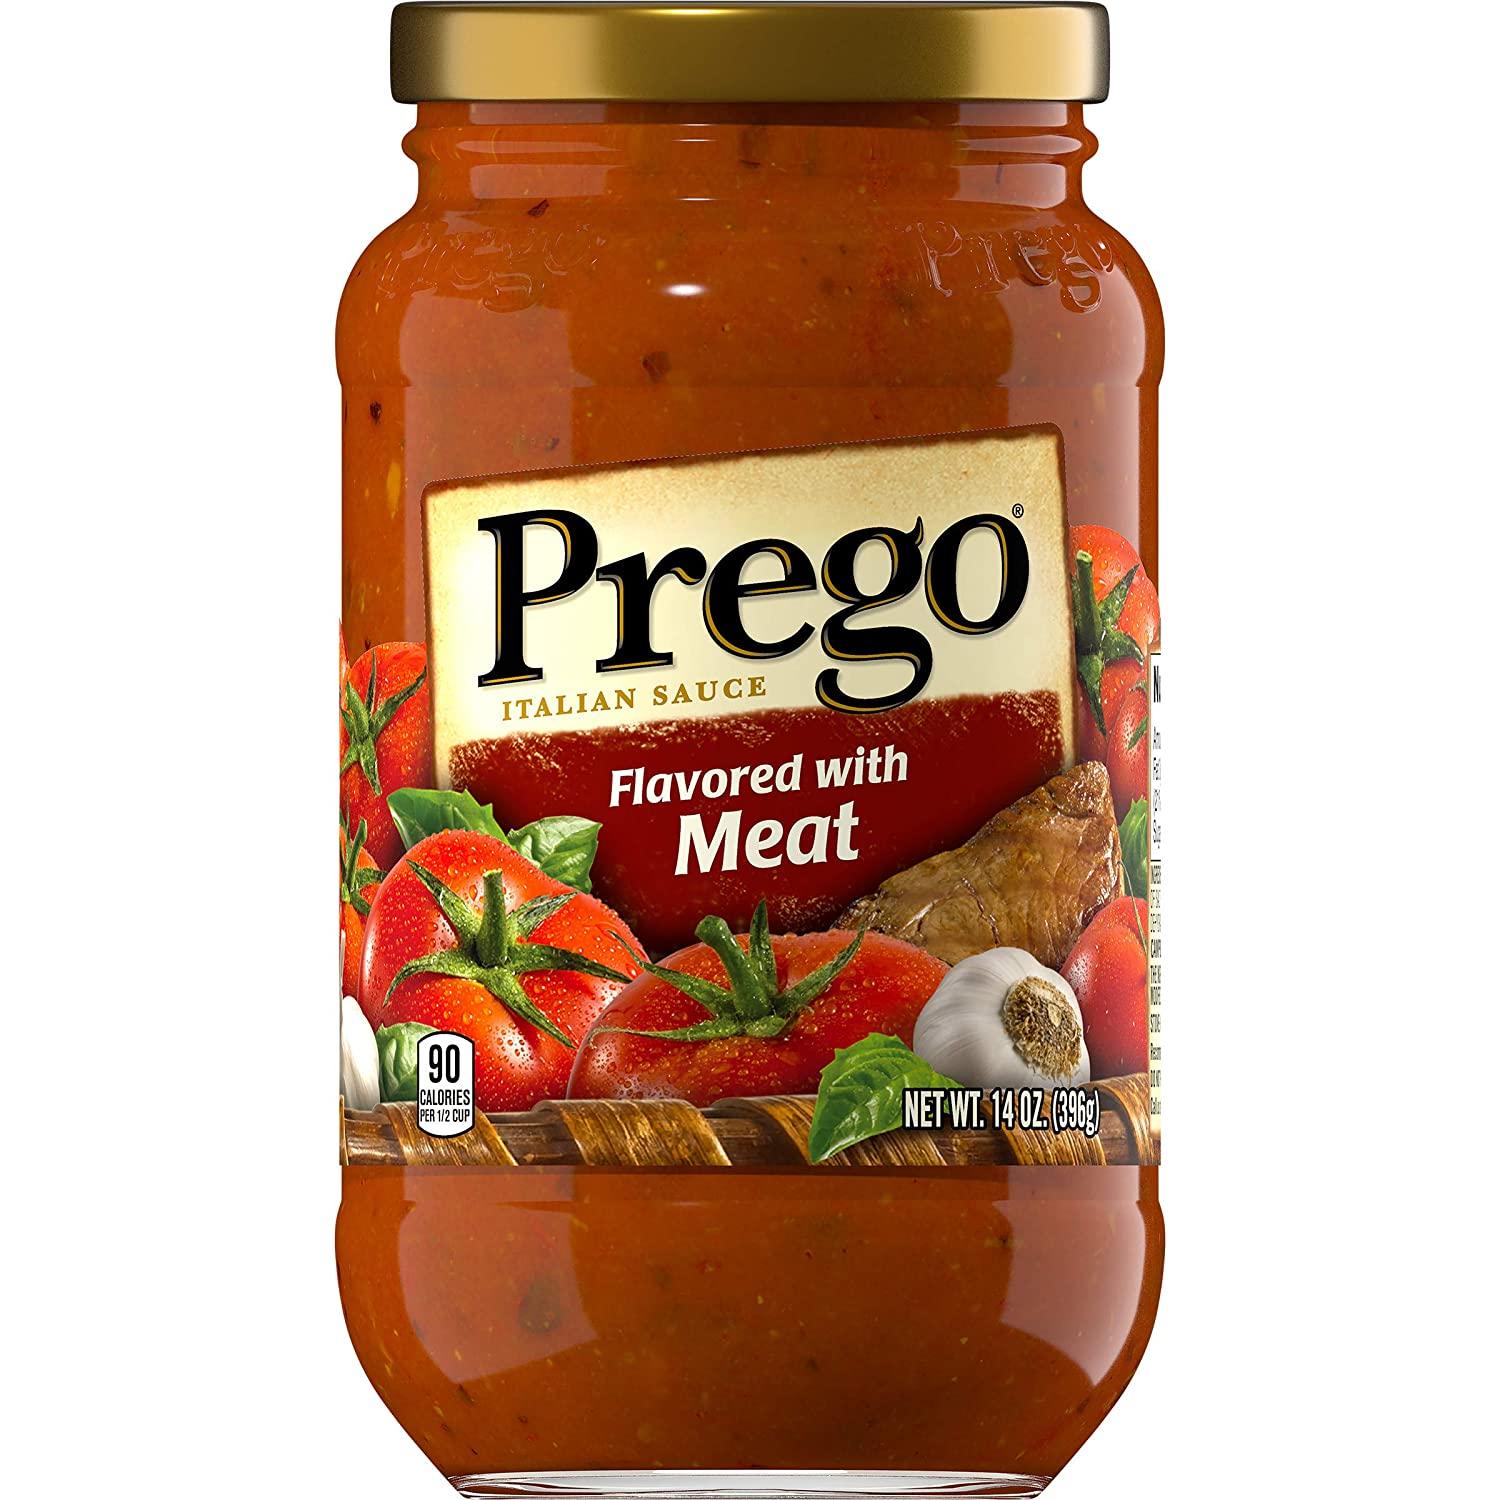 2 Prego Italian Sauce for $2.69